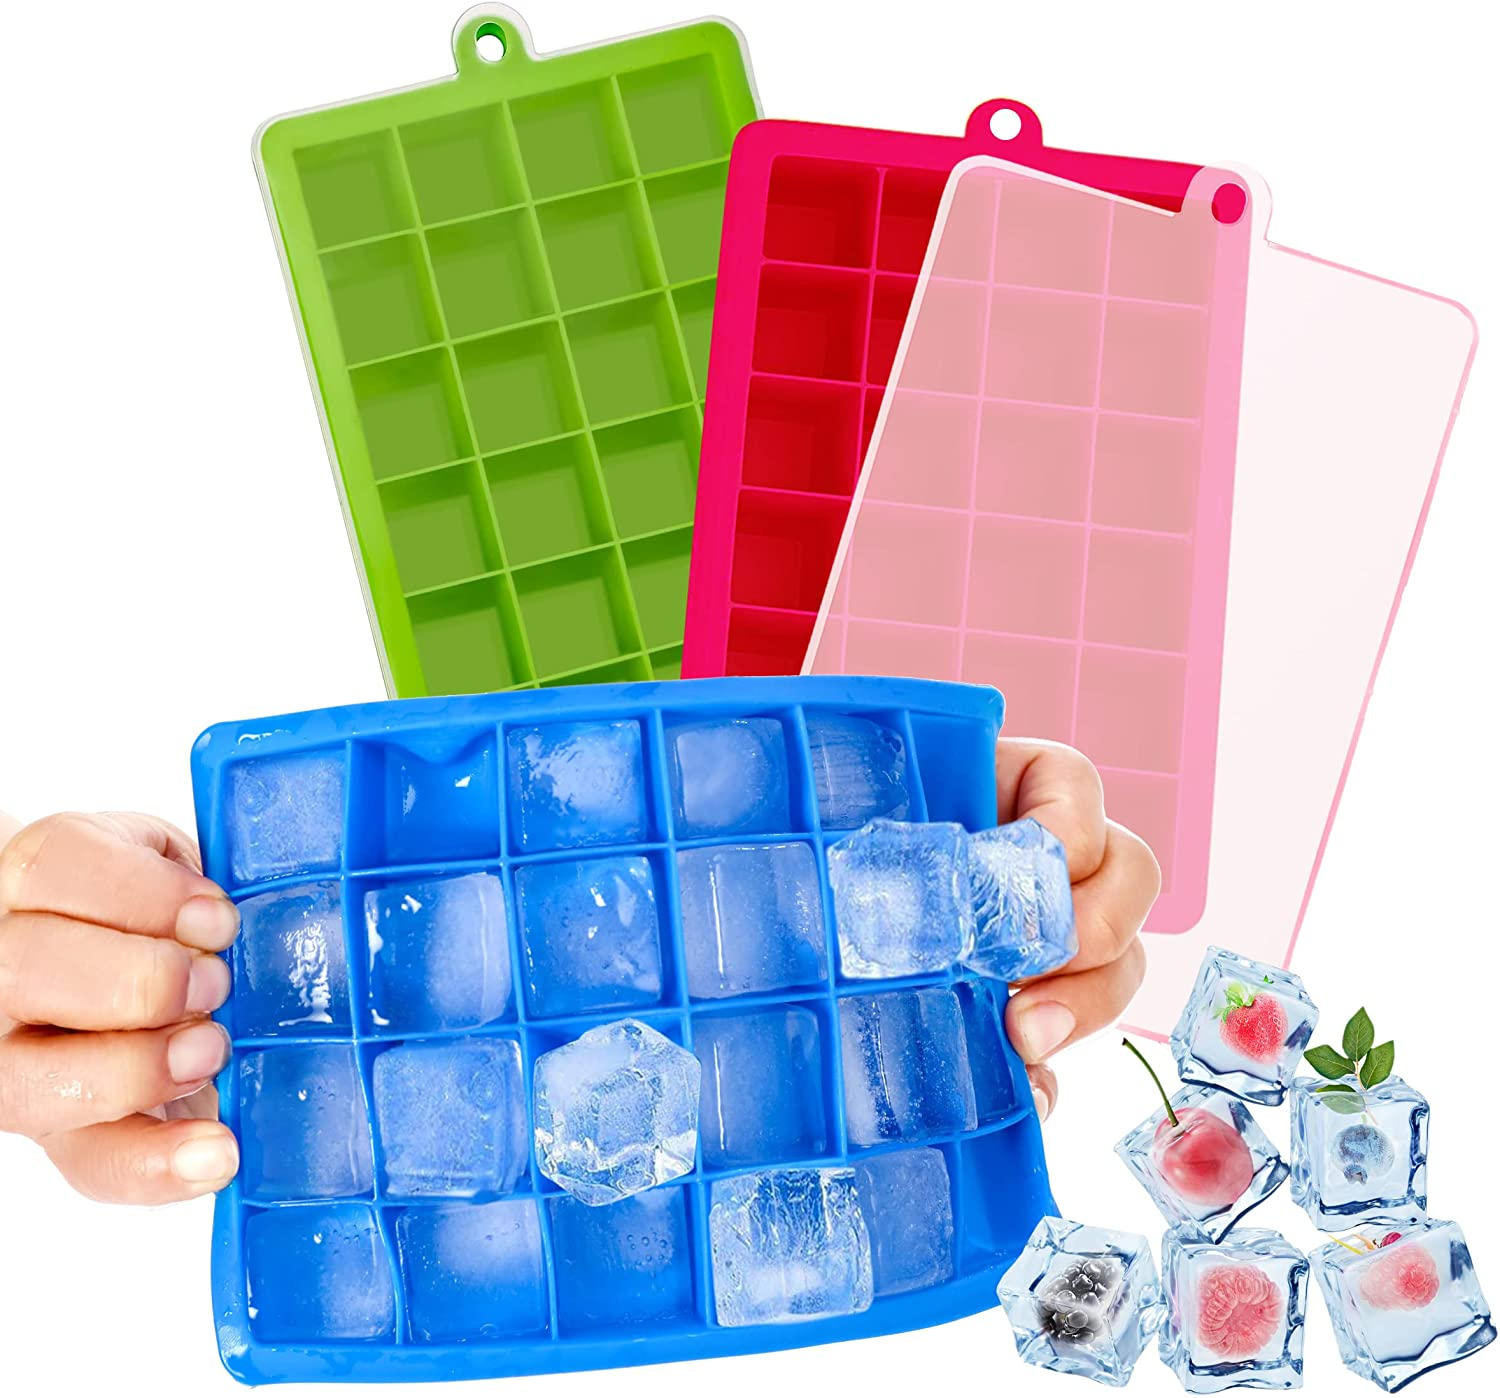 The 10 Coolest Ice Cube Trays  Novelty ice cube trays, Dinosaur